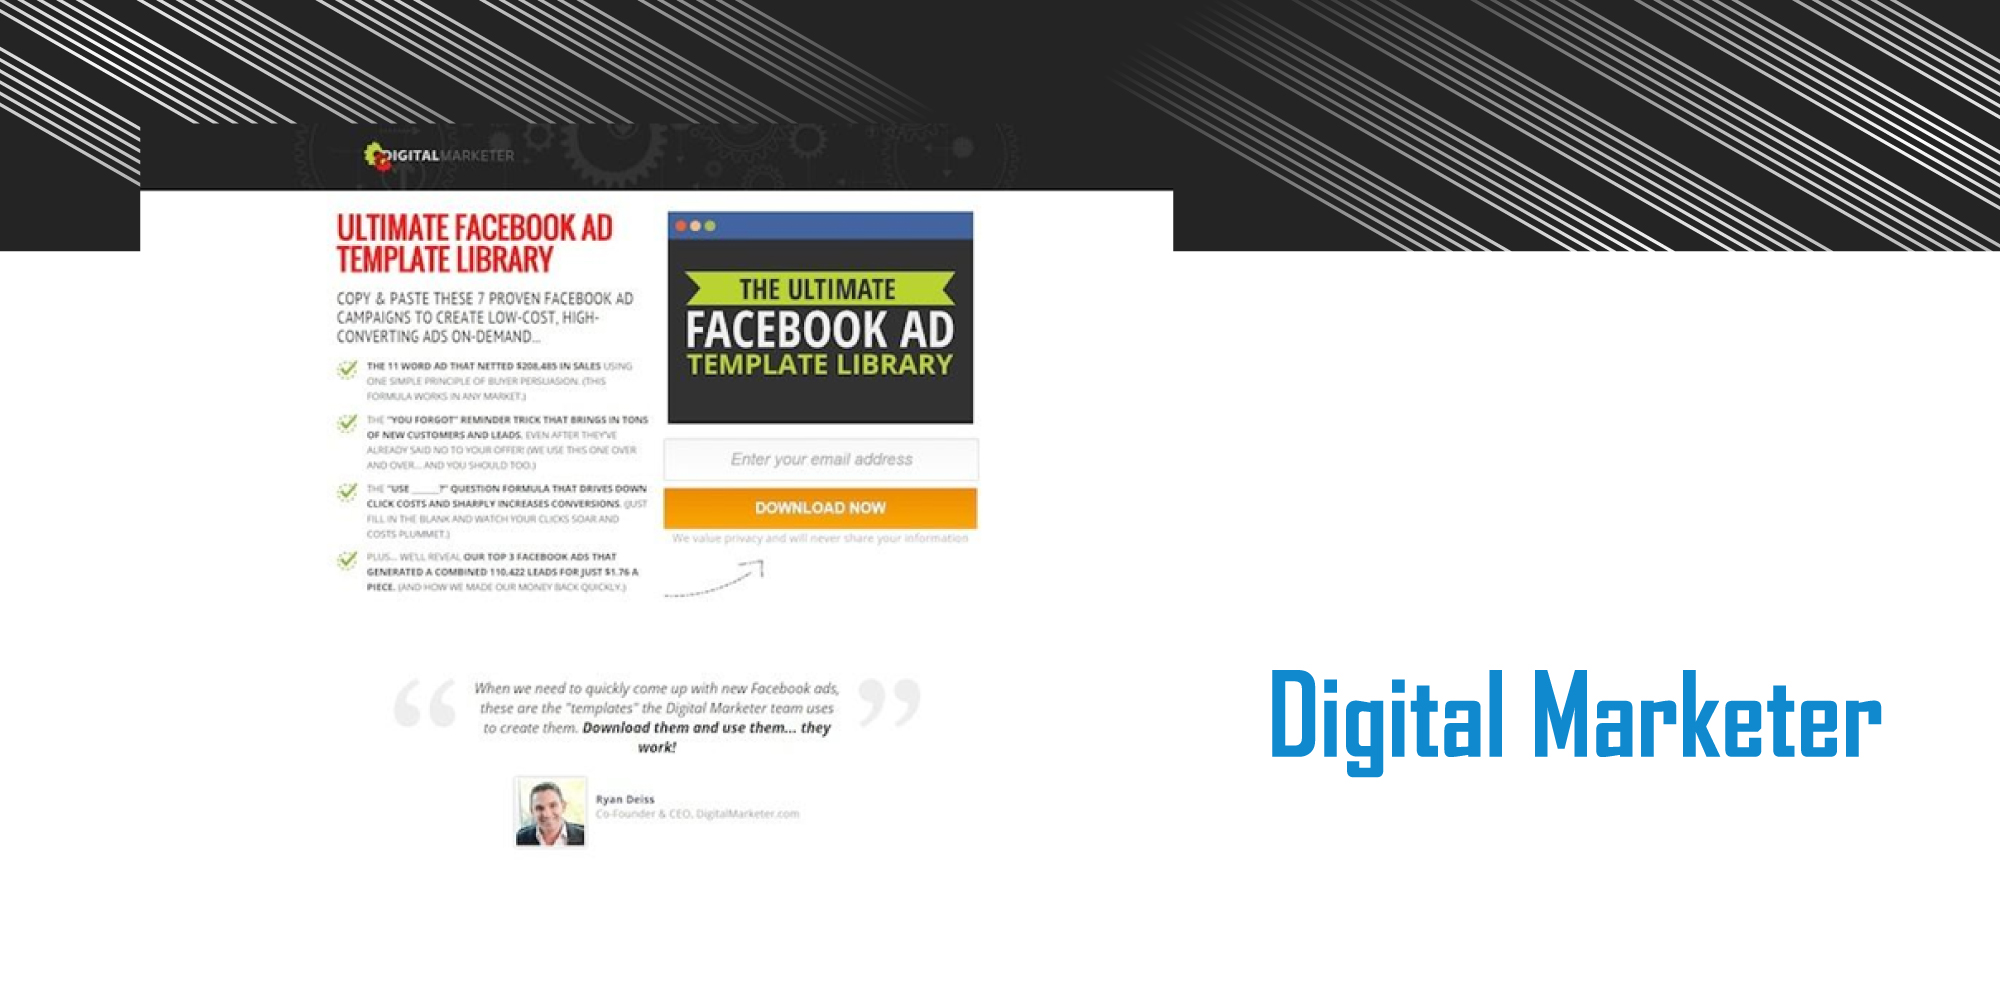 digital marketer landing page